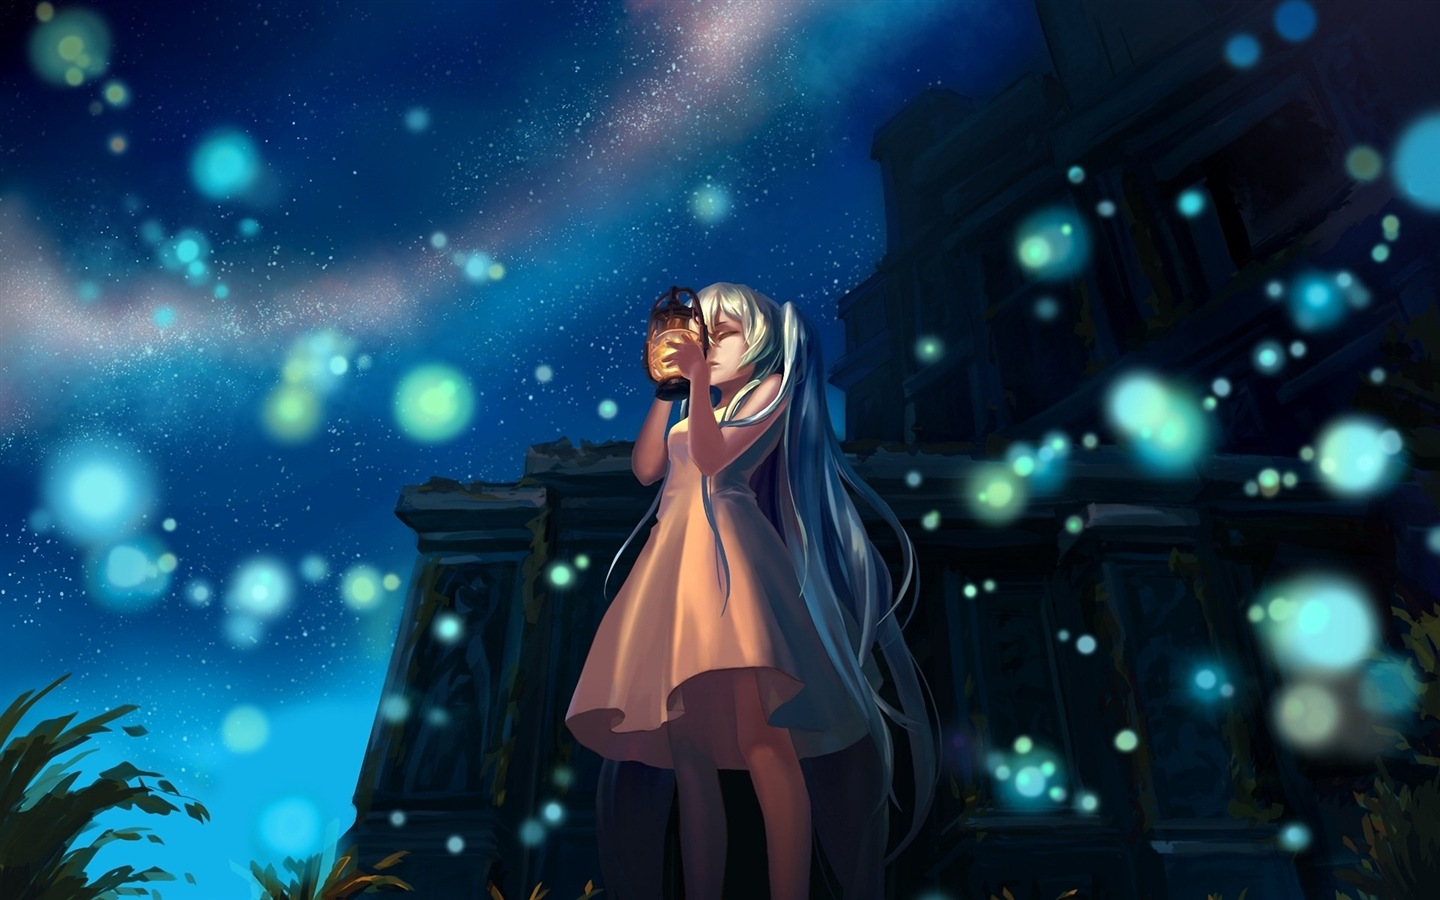 Firefly Summer beautiful anime wallpaper #16 - 1440x900